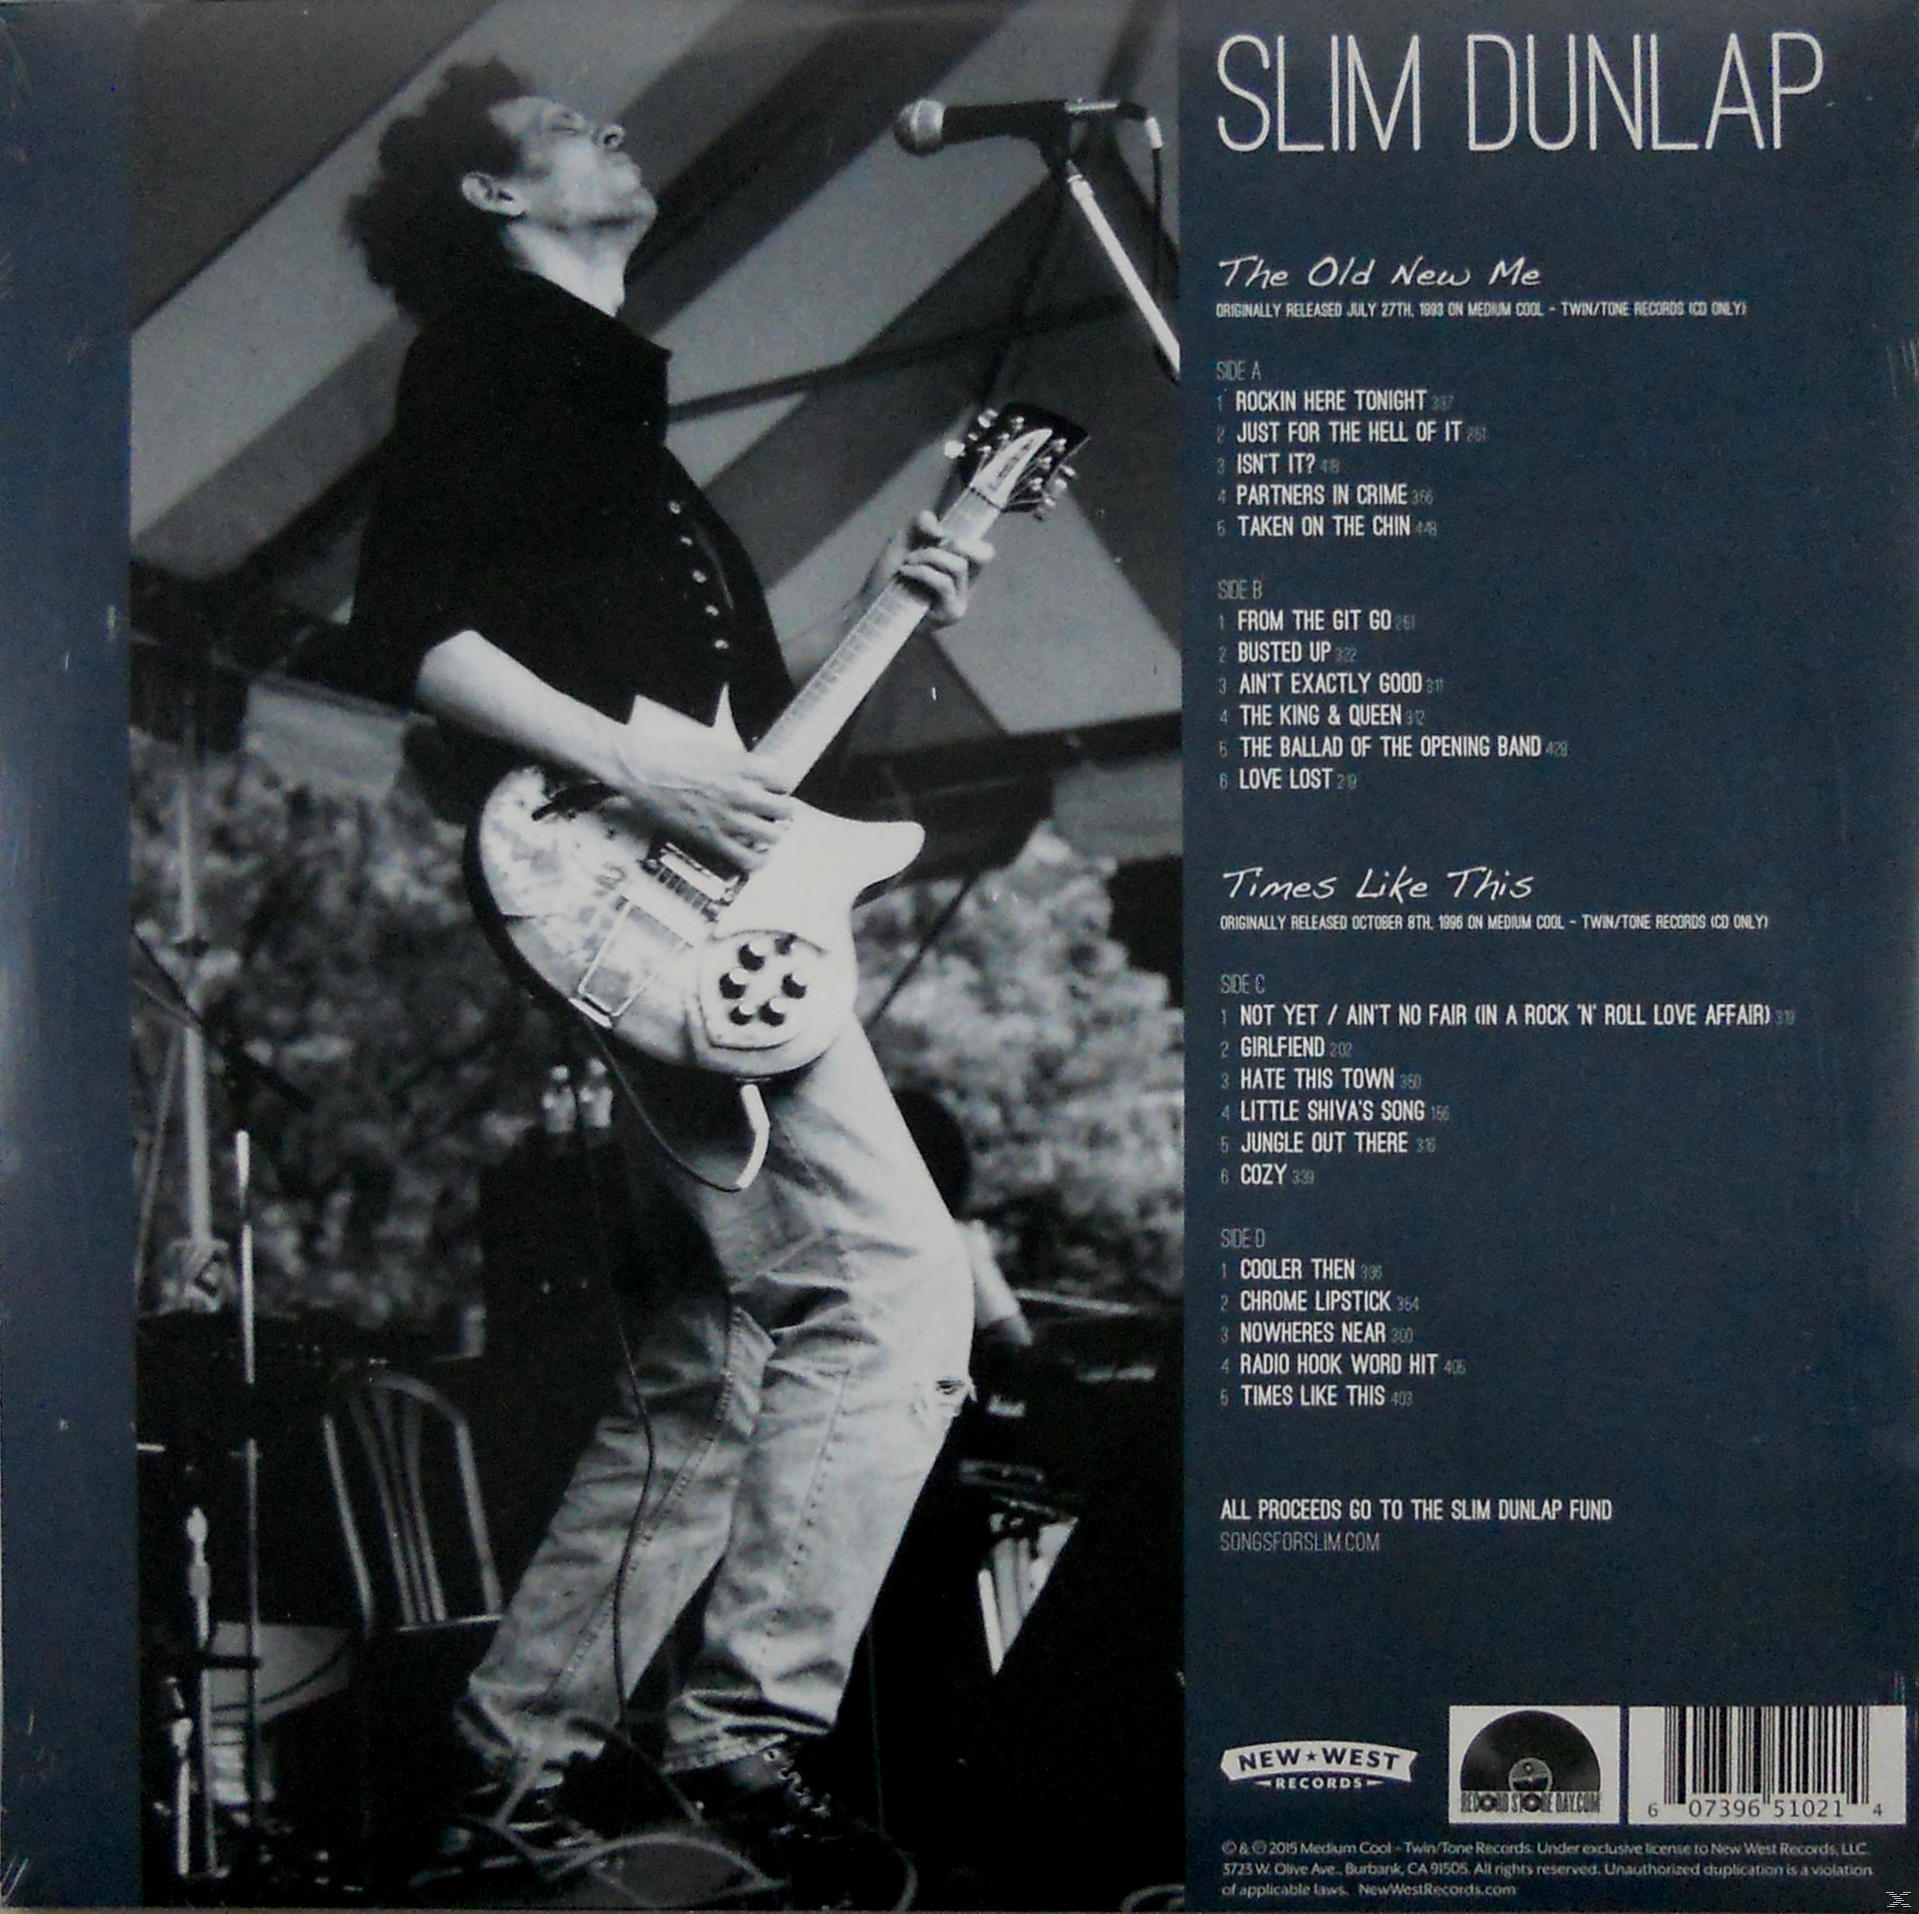 This - (2lp) Like Slim Dunlap Old - The New (Vinyl) Me/Times